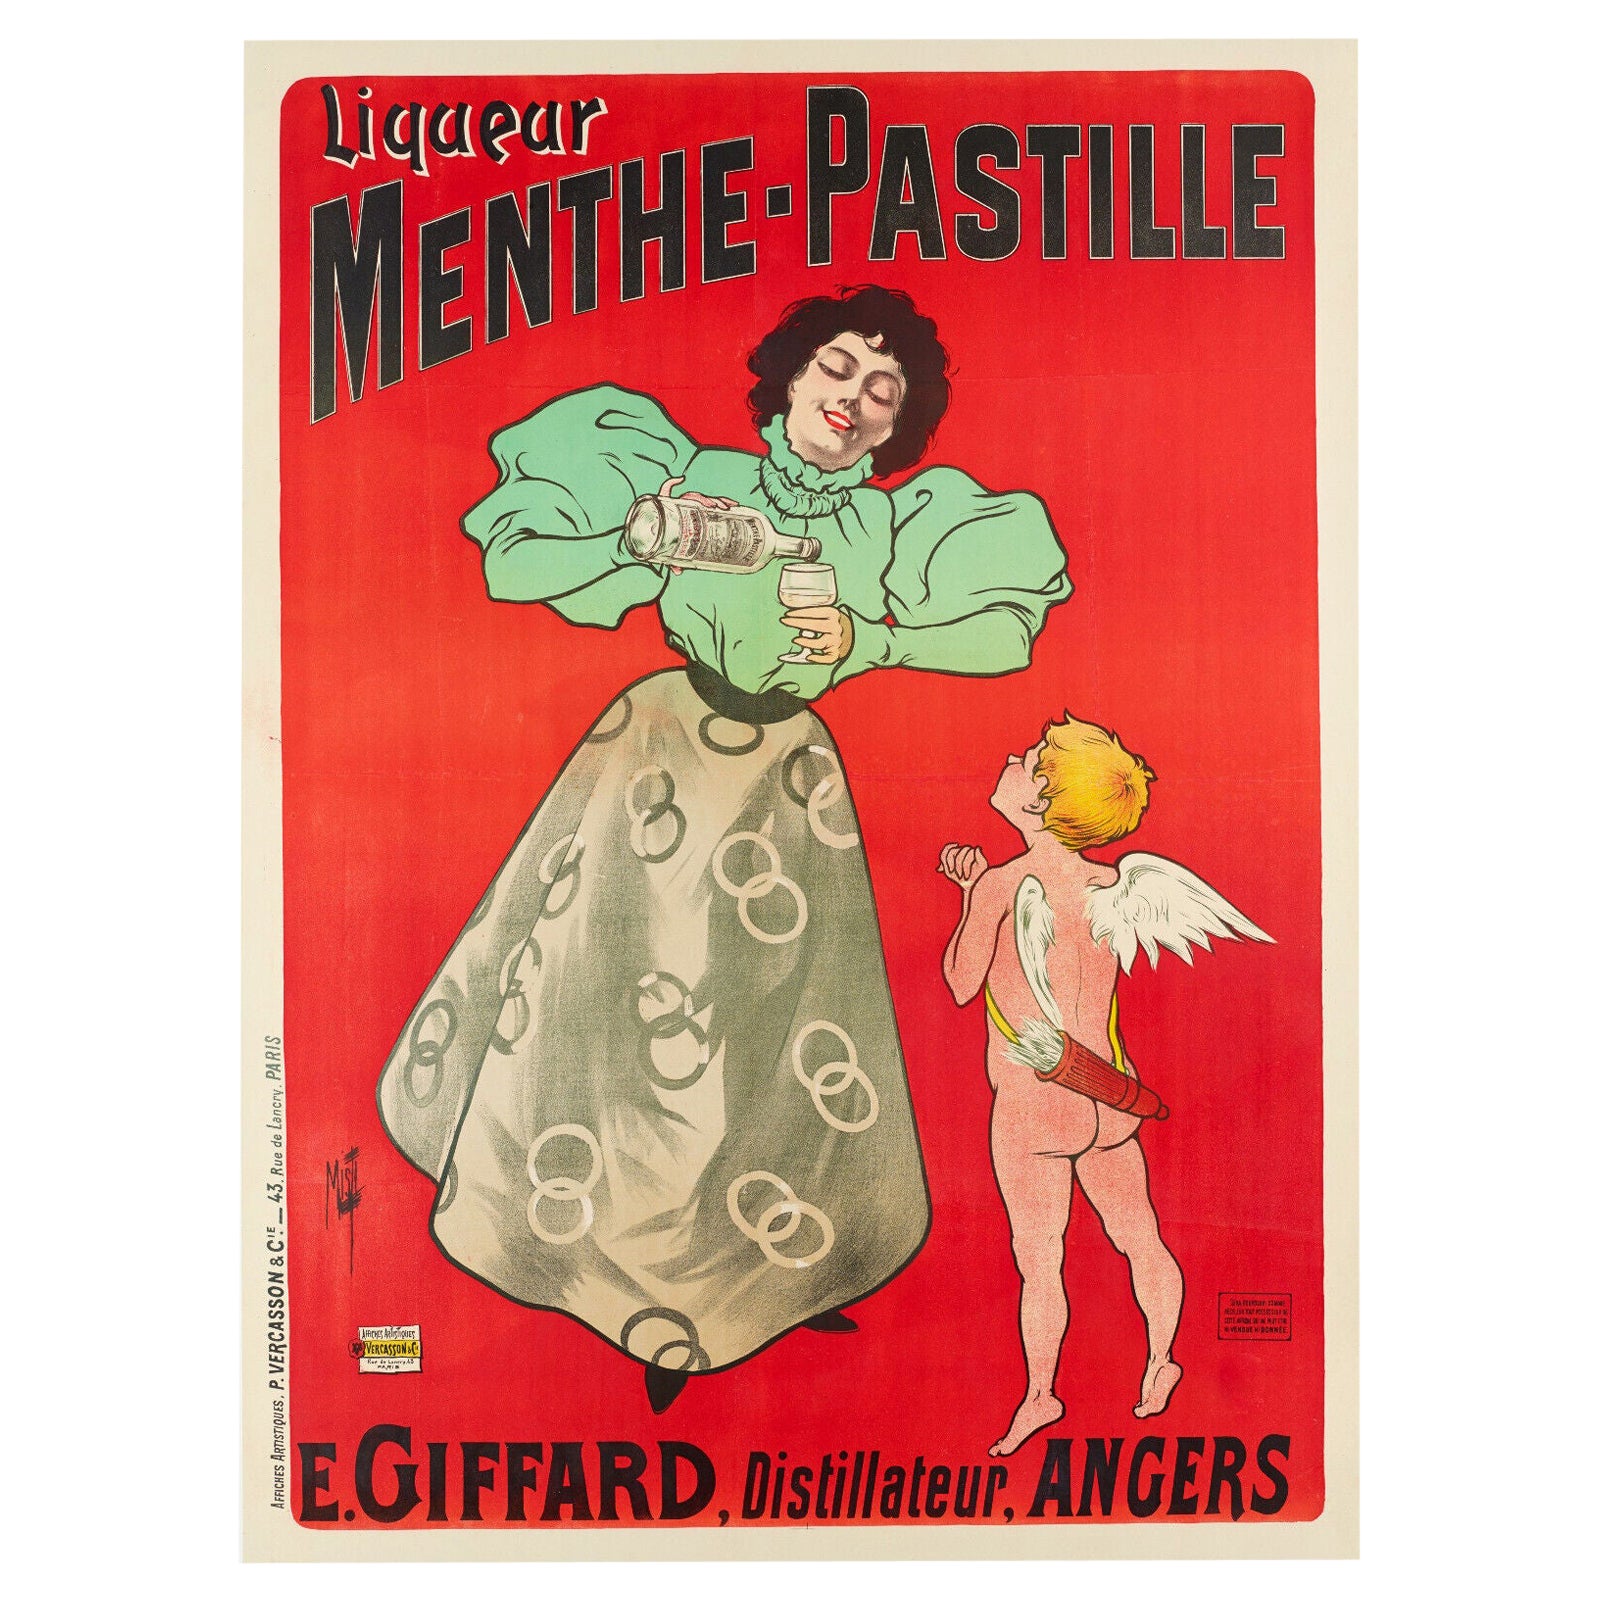 Misti, Original-Alkoholzplakat aus der Belle Epoque, mintfarbener Likör, Amor / Engel, 1895